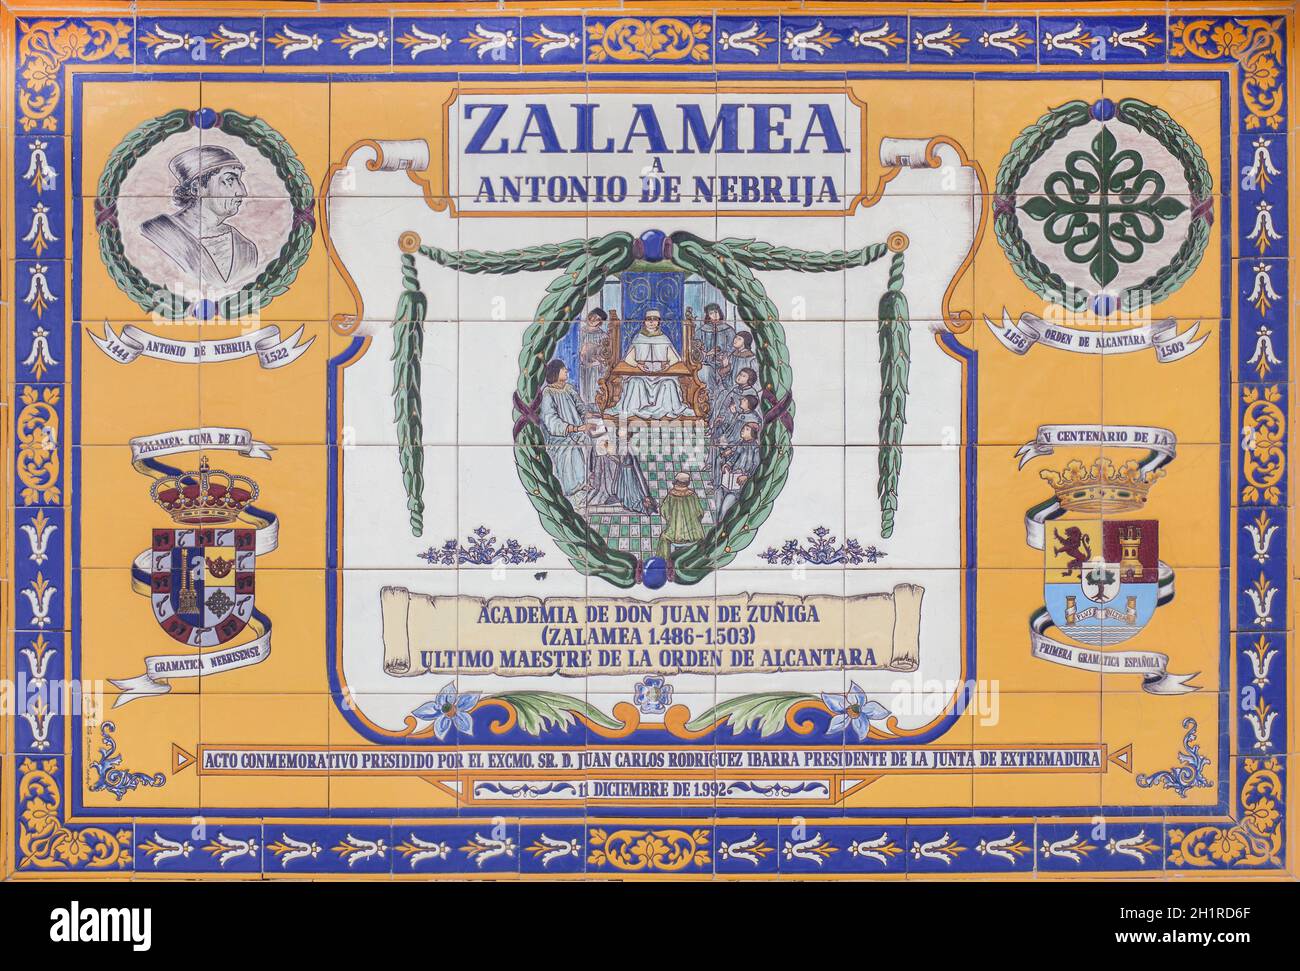 Glazed tiles memorial plaque that pay tribute to Antonio de Nebrija, the first spanish languaje gramarian who lived in Zalamea, Badajoz, Spain Stock Photo